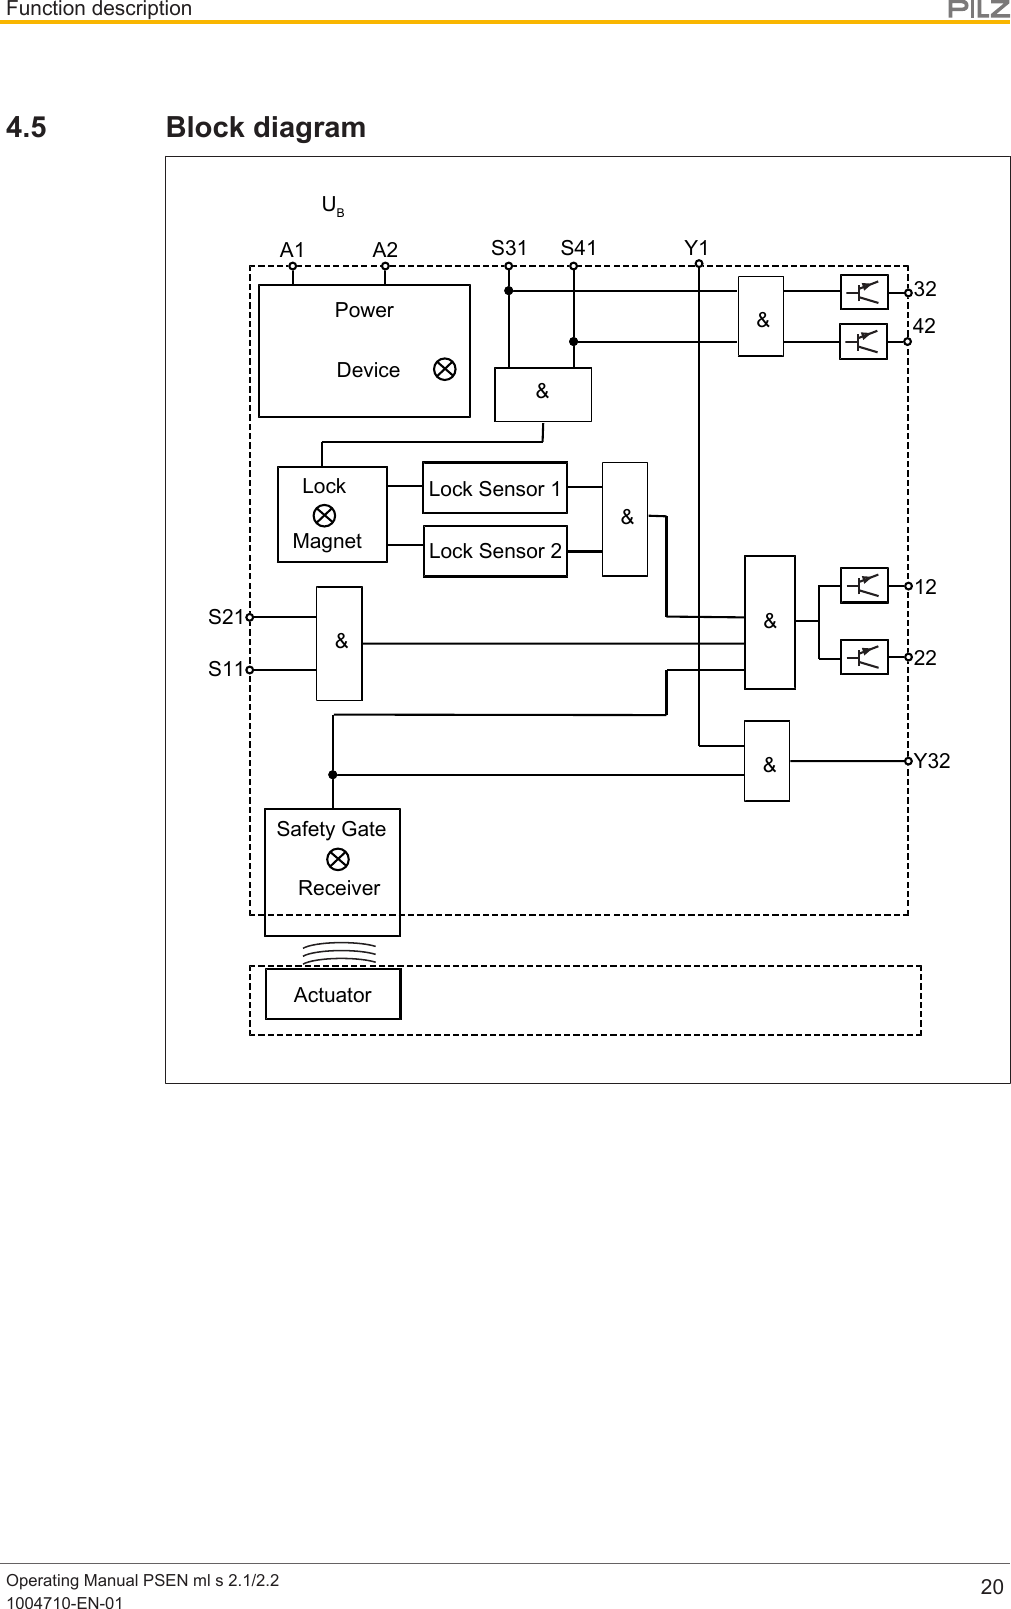 Function descriptionOperating Manual PSEN ml s 2.1/2.21004710-EN-01 204.5 Block diagramActuatorA1 A21222&amp;S31 S41UBDeviceReceiverSafety GateMagnetLockPowerY32Lock Sensor 1Lock Sensor 2&amp;Y1S11S213242&amp;&amp;&amp;&amp;